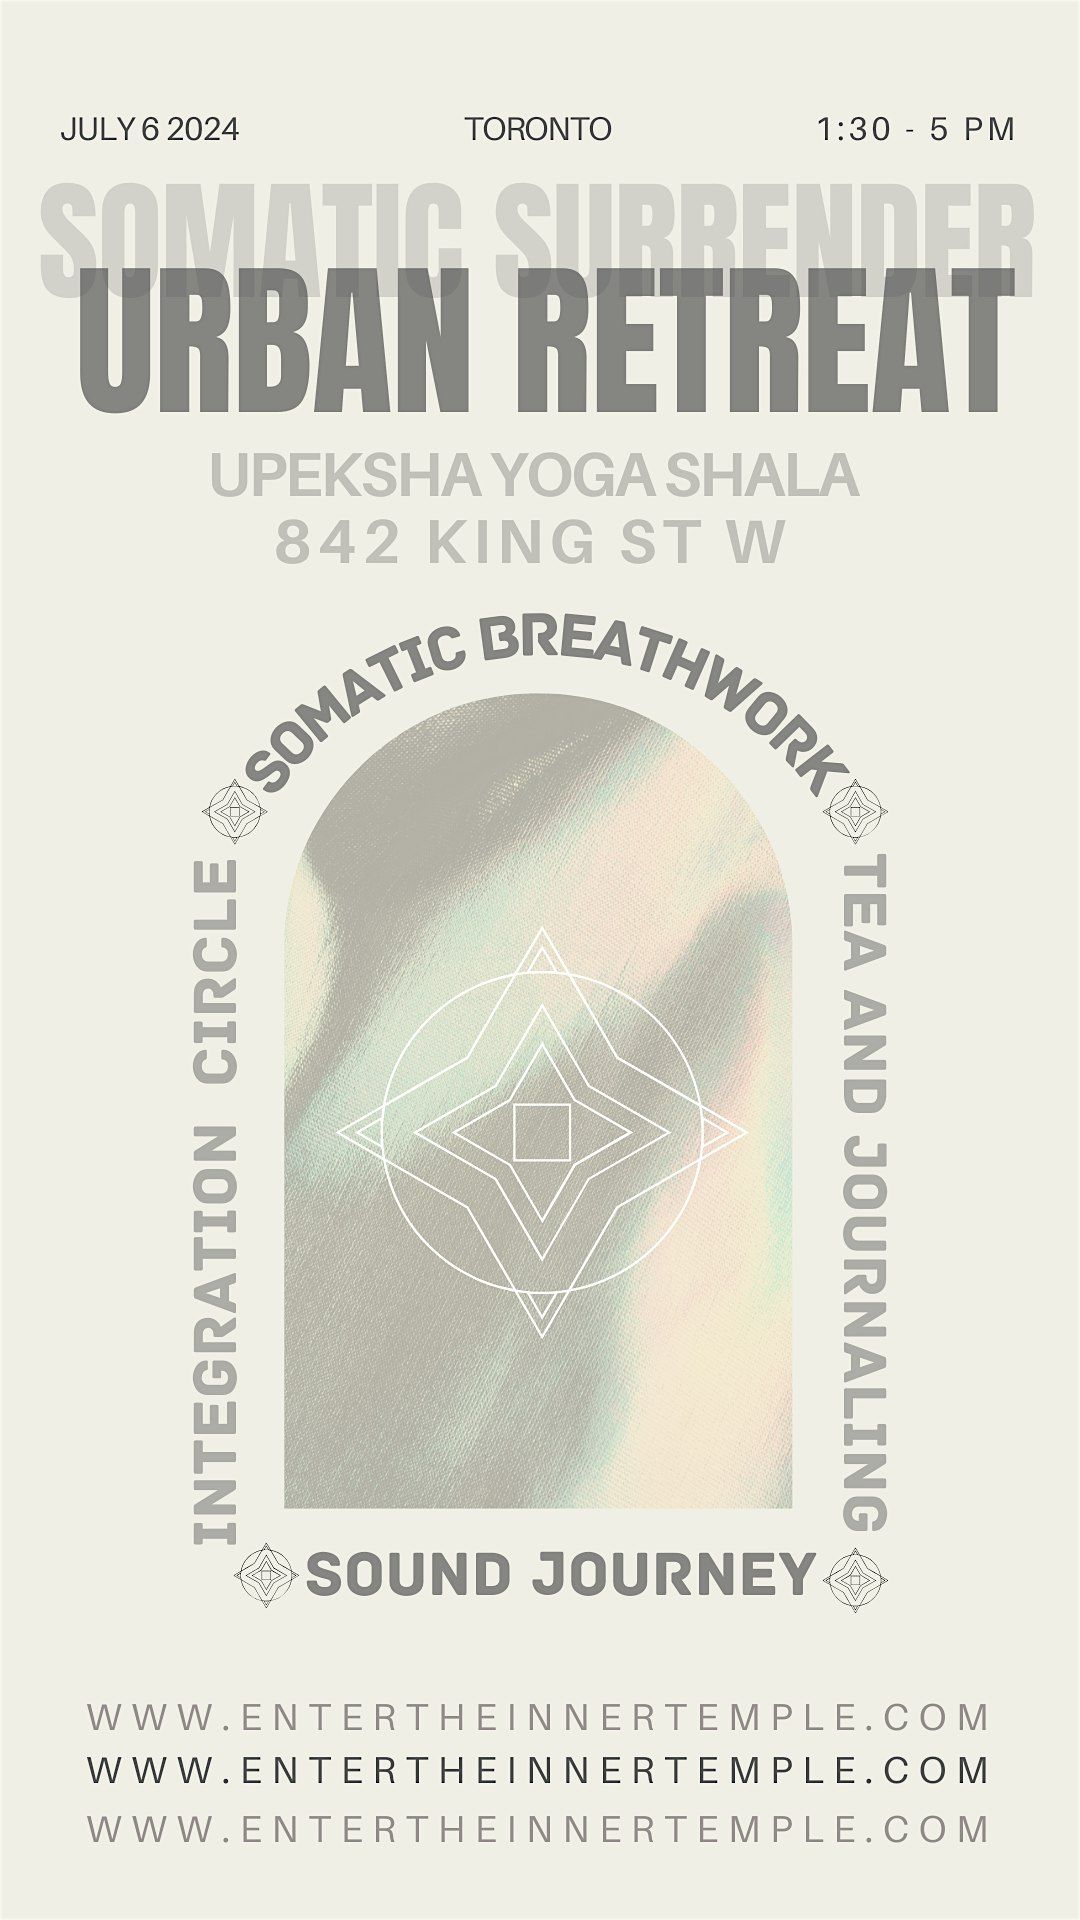 Somatic Breathwork, Sound Journey and Integrative Facilitation